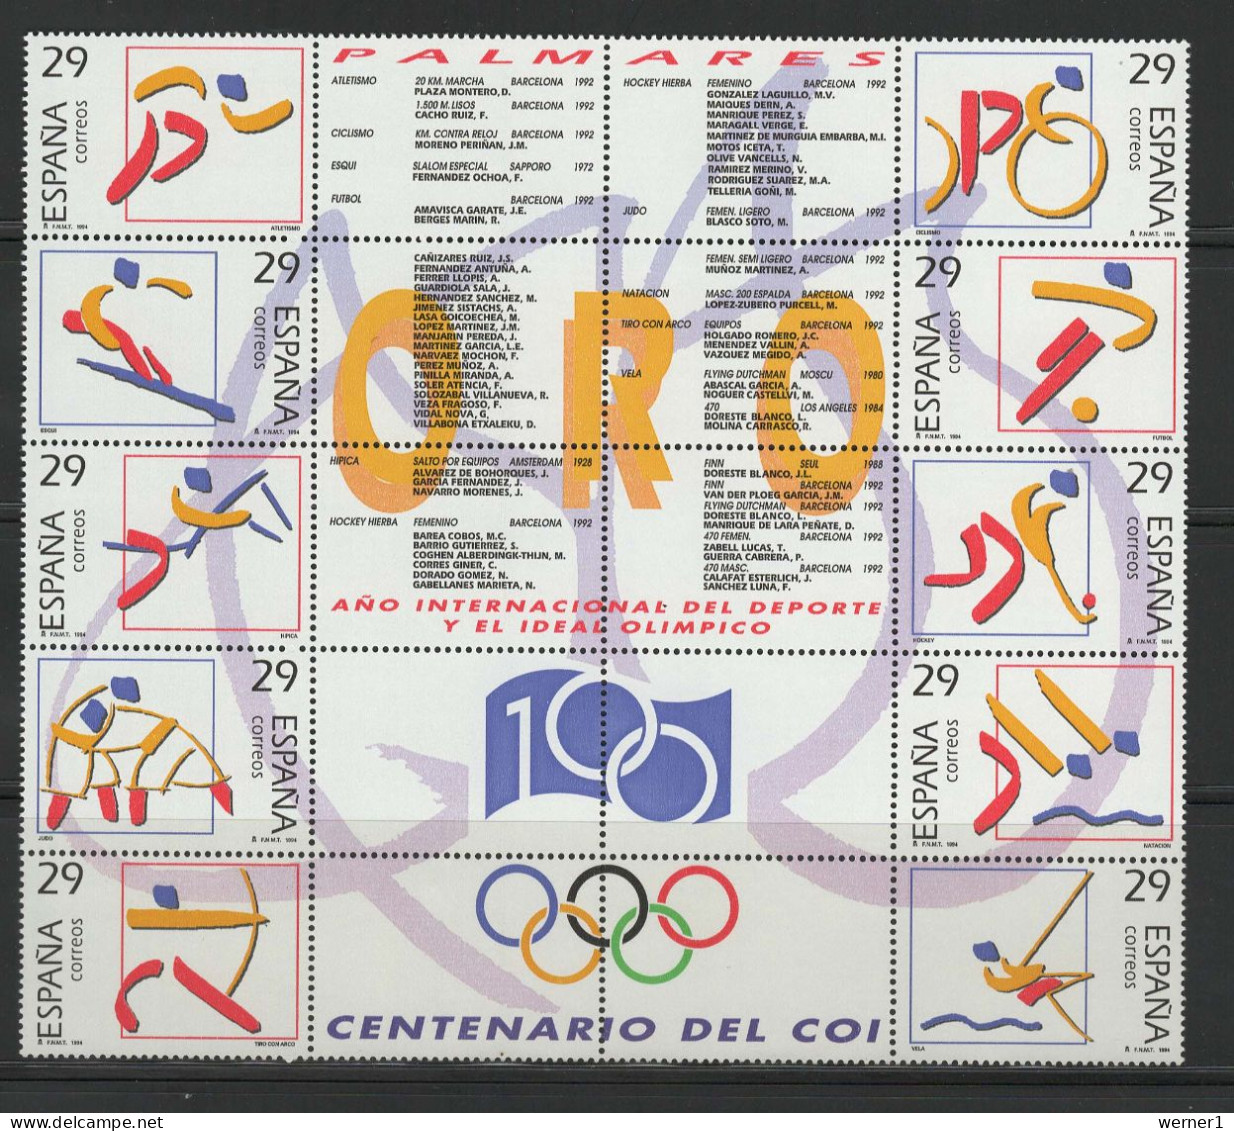 Spain 1994 Olympic Games, Equestrian, Judo, Football Soccer Etc. Sheetlet MNH - Ete 1996: Atlanta